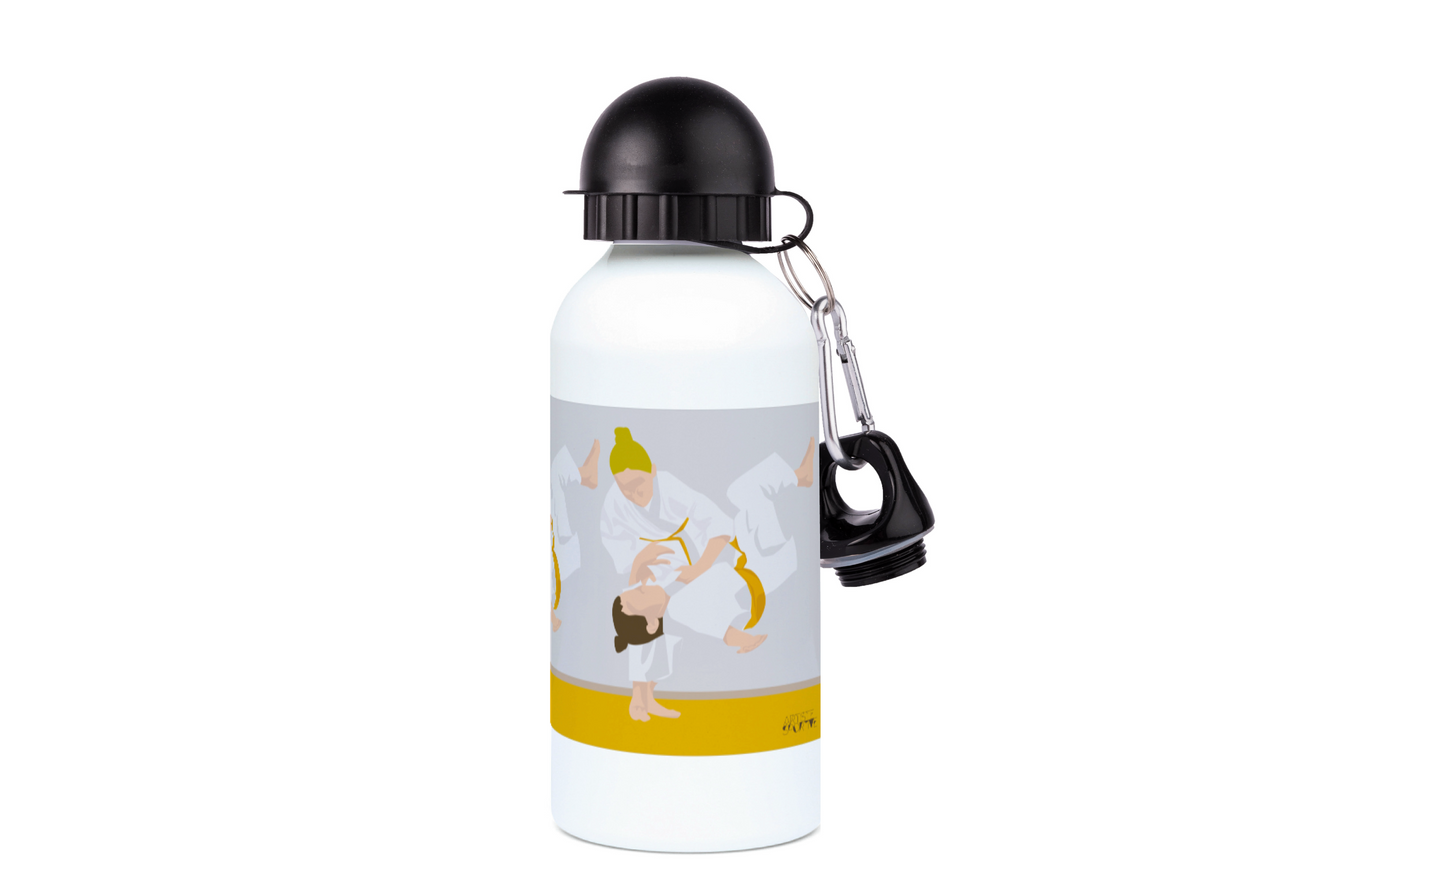 Aluminum judo bottle for girls "Jeanne la judoka" - Customizable